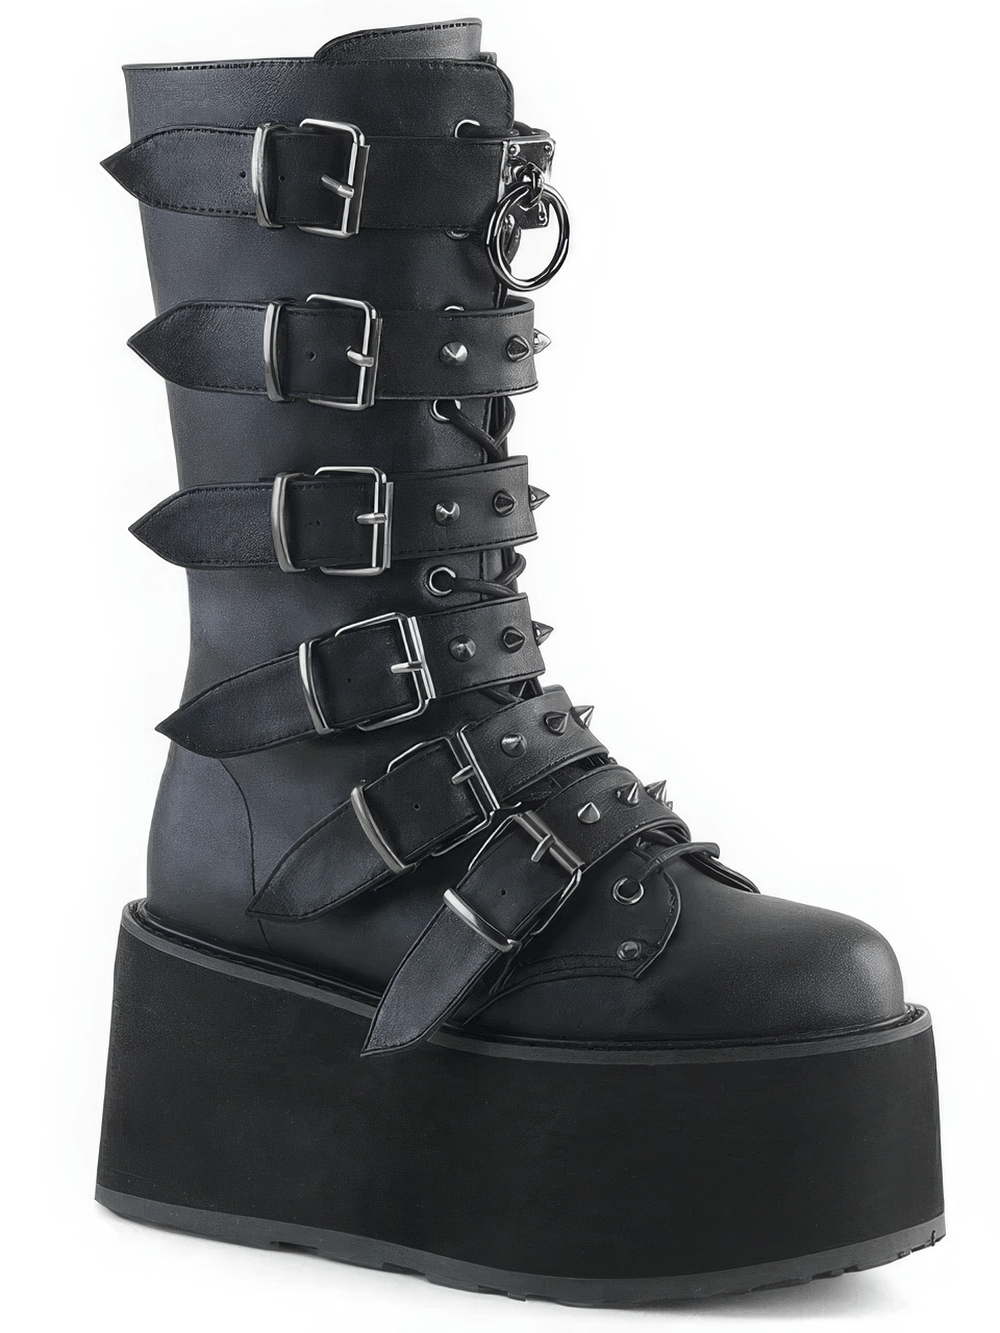 DEMONIA Black Platform Mid-Calf Boots with Studded Straps